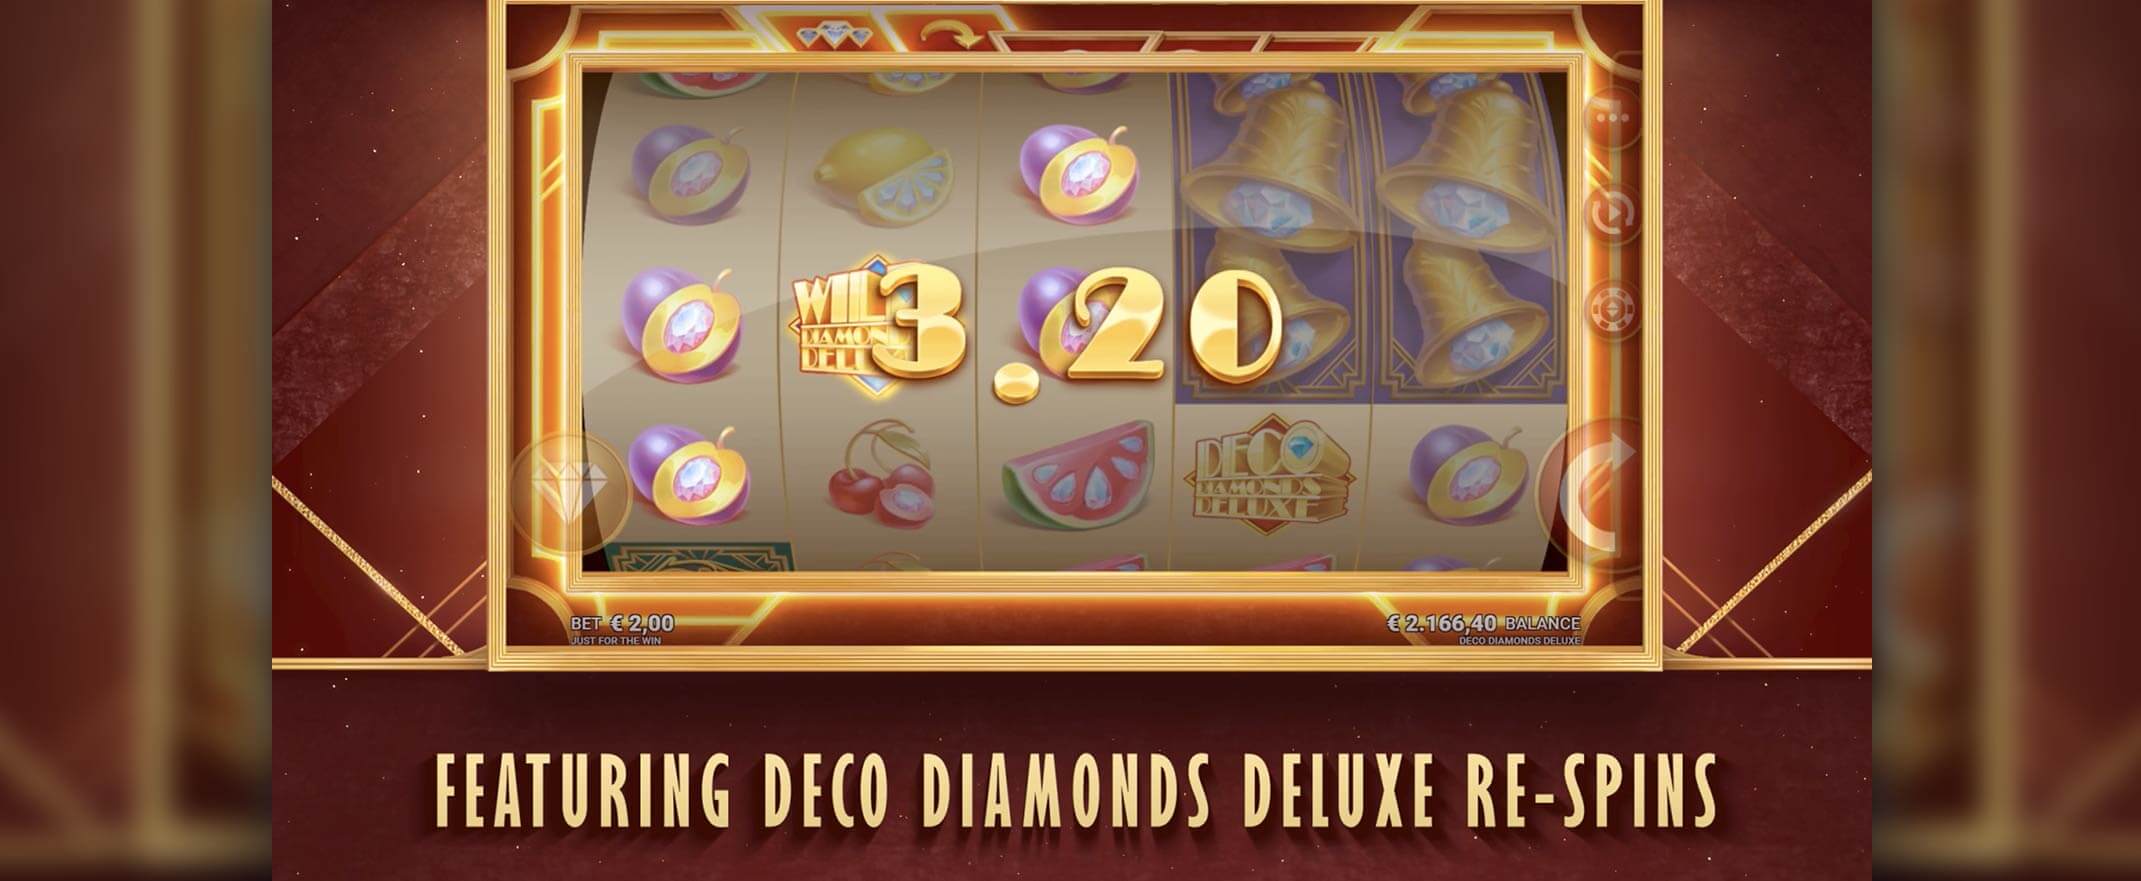 Deco Diamonds Spielautomat spielen